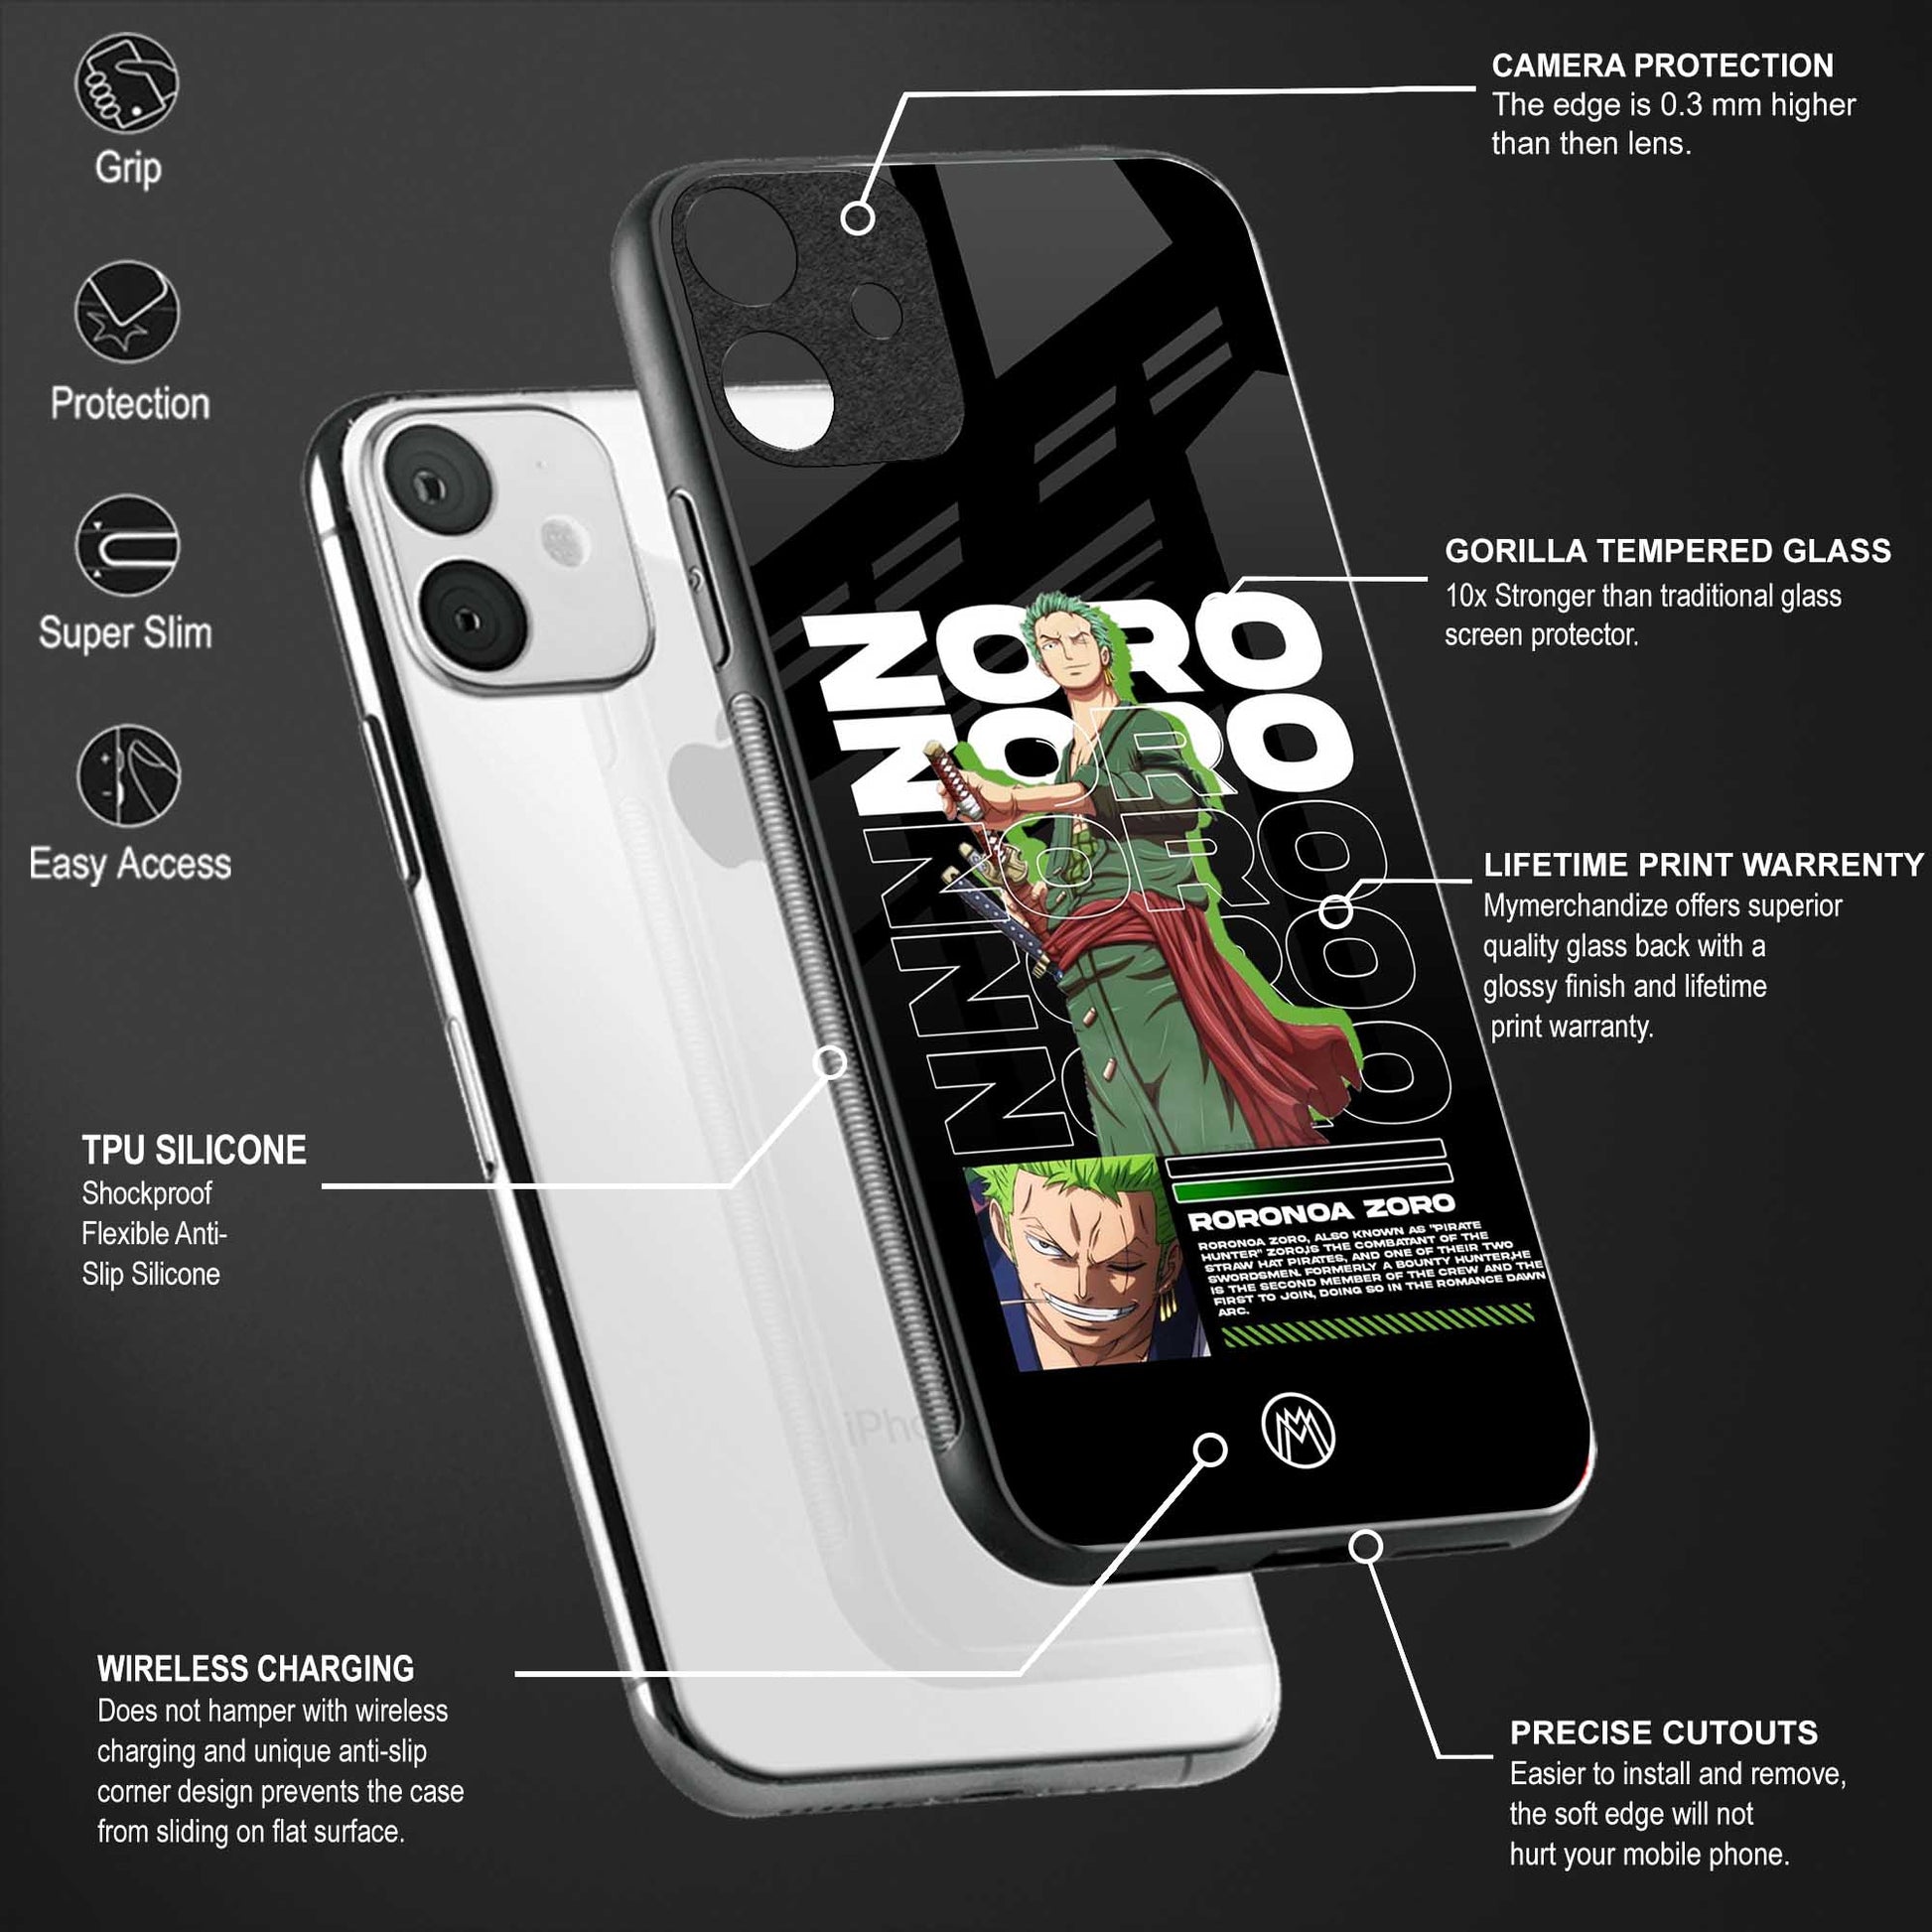 roronoa zoro glass case for iphone 6 image-4